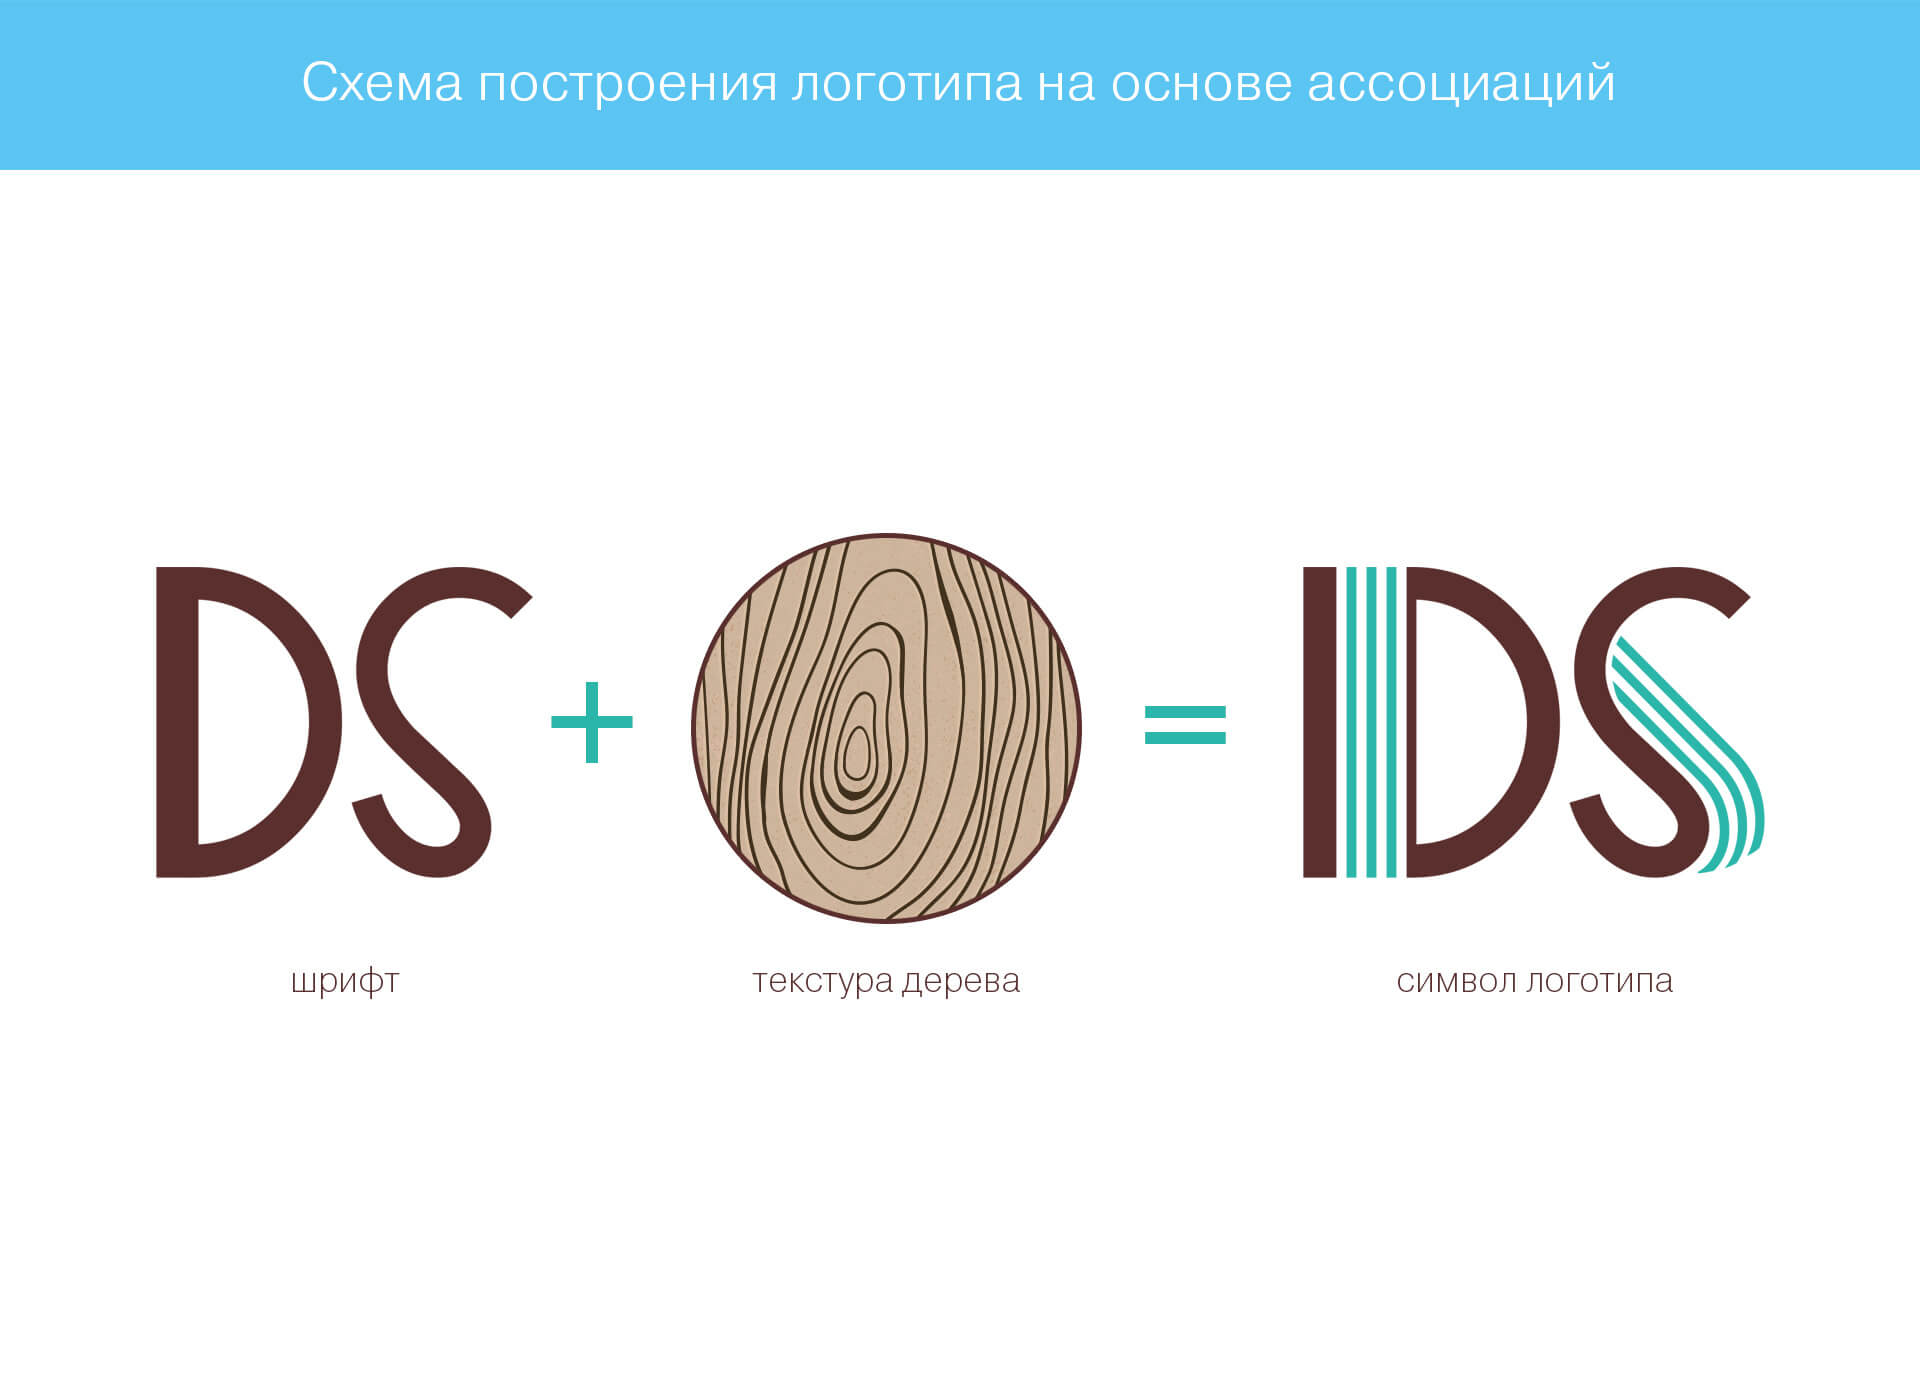 prokochuk_irina_design-s_2_